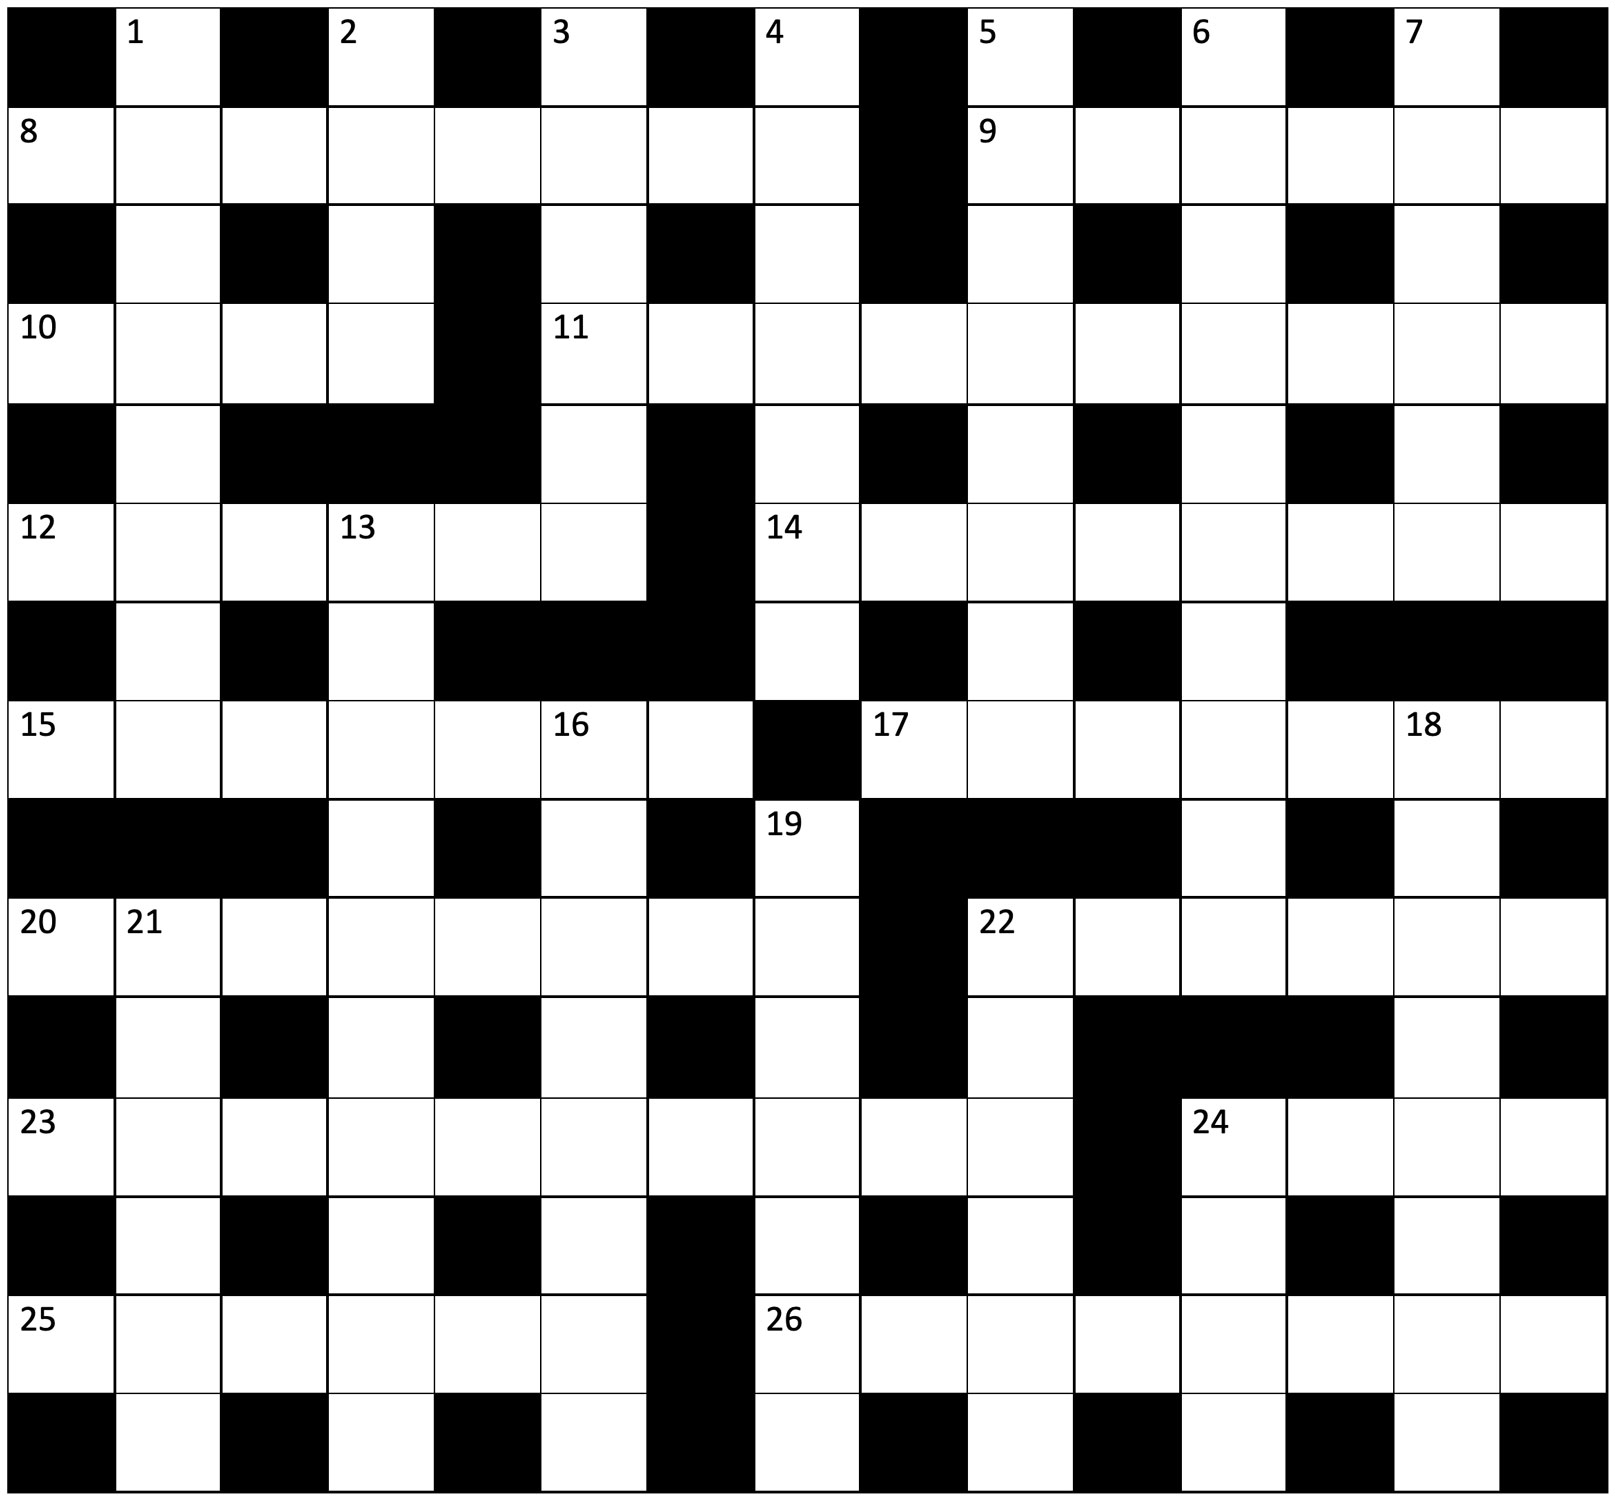 Cryptic crossword No.7